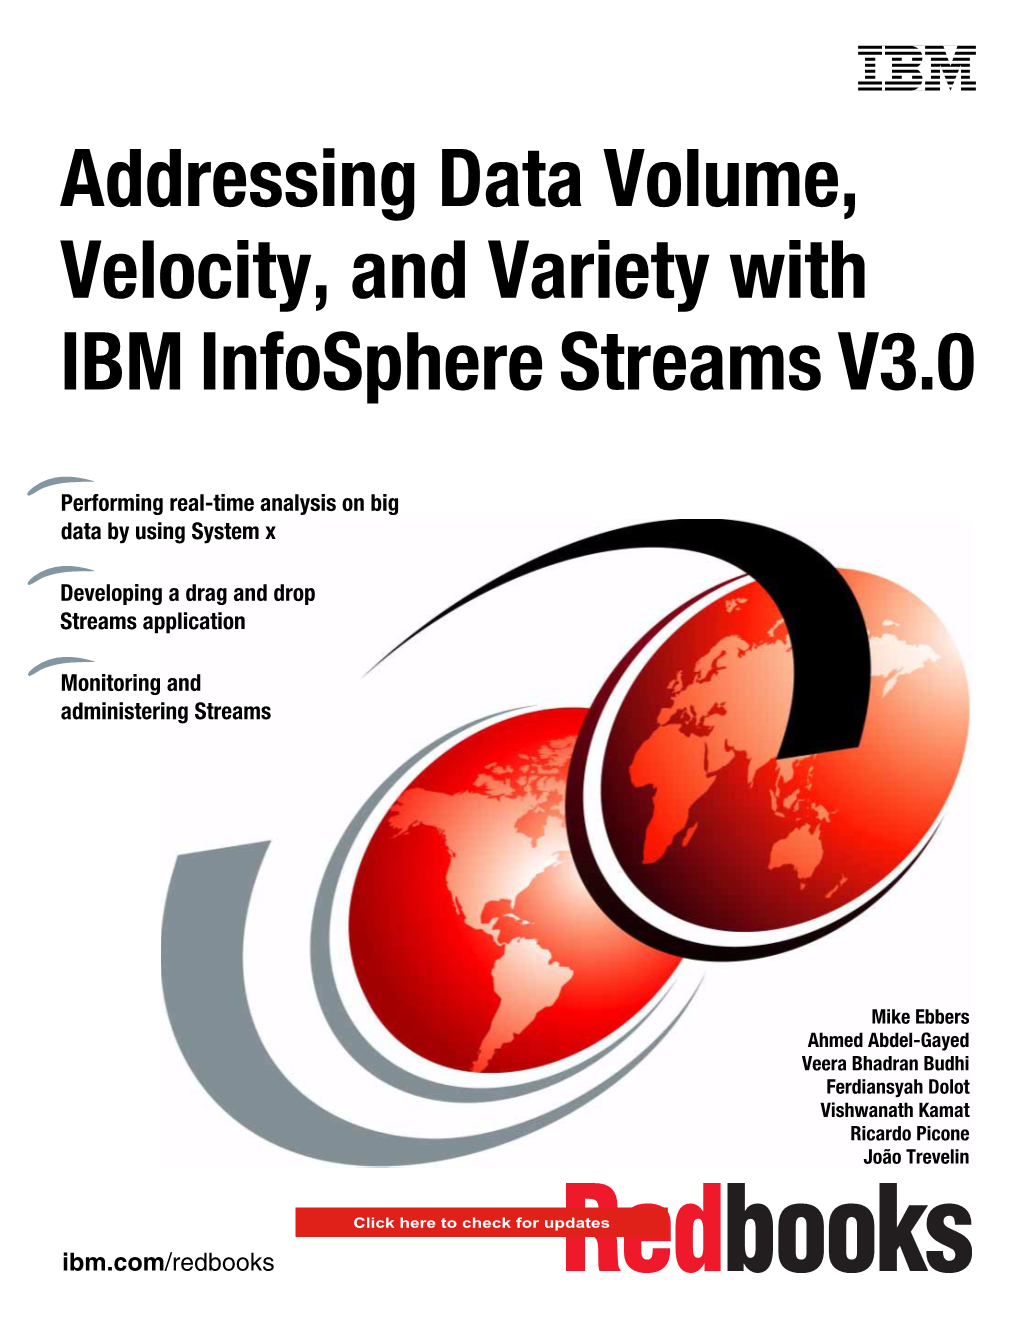 IBM Infosphere Streams V3.0